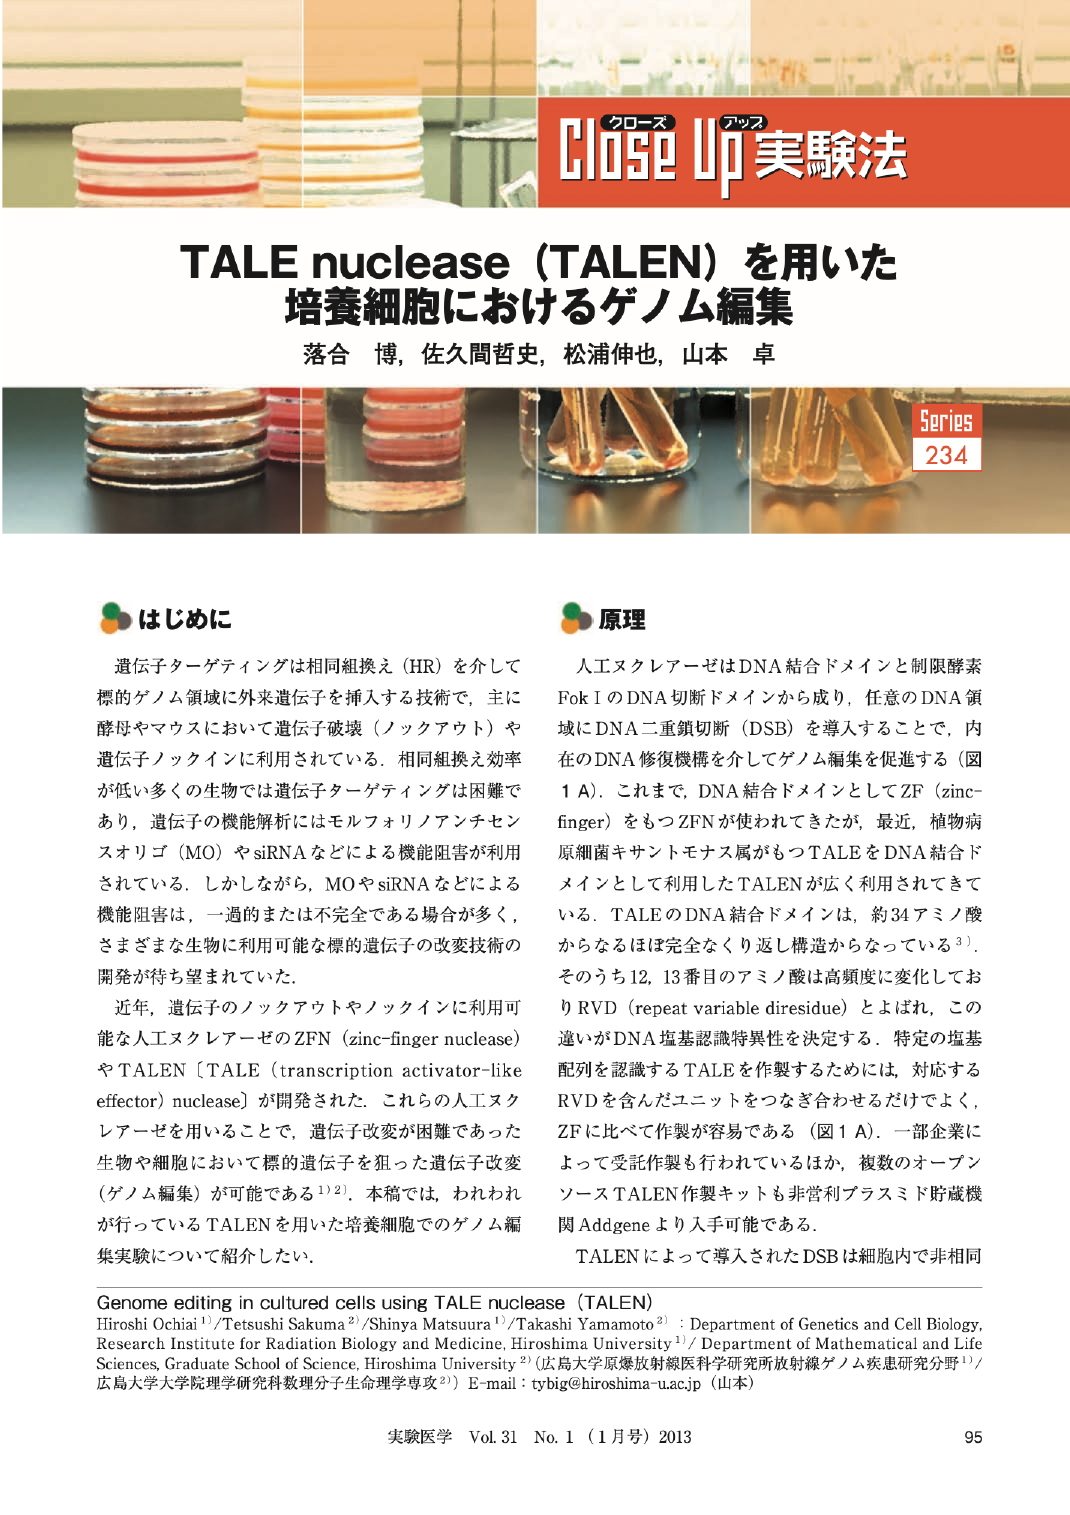 TALE nuclease （TALEN） を用いた培養細胞におけるゲノム編集